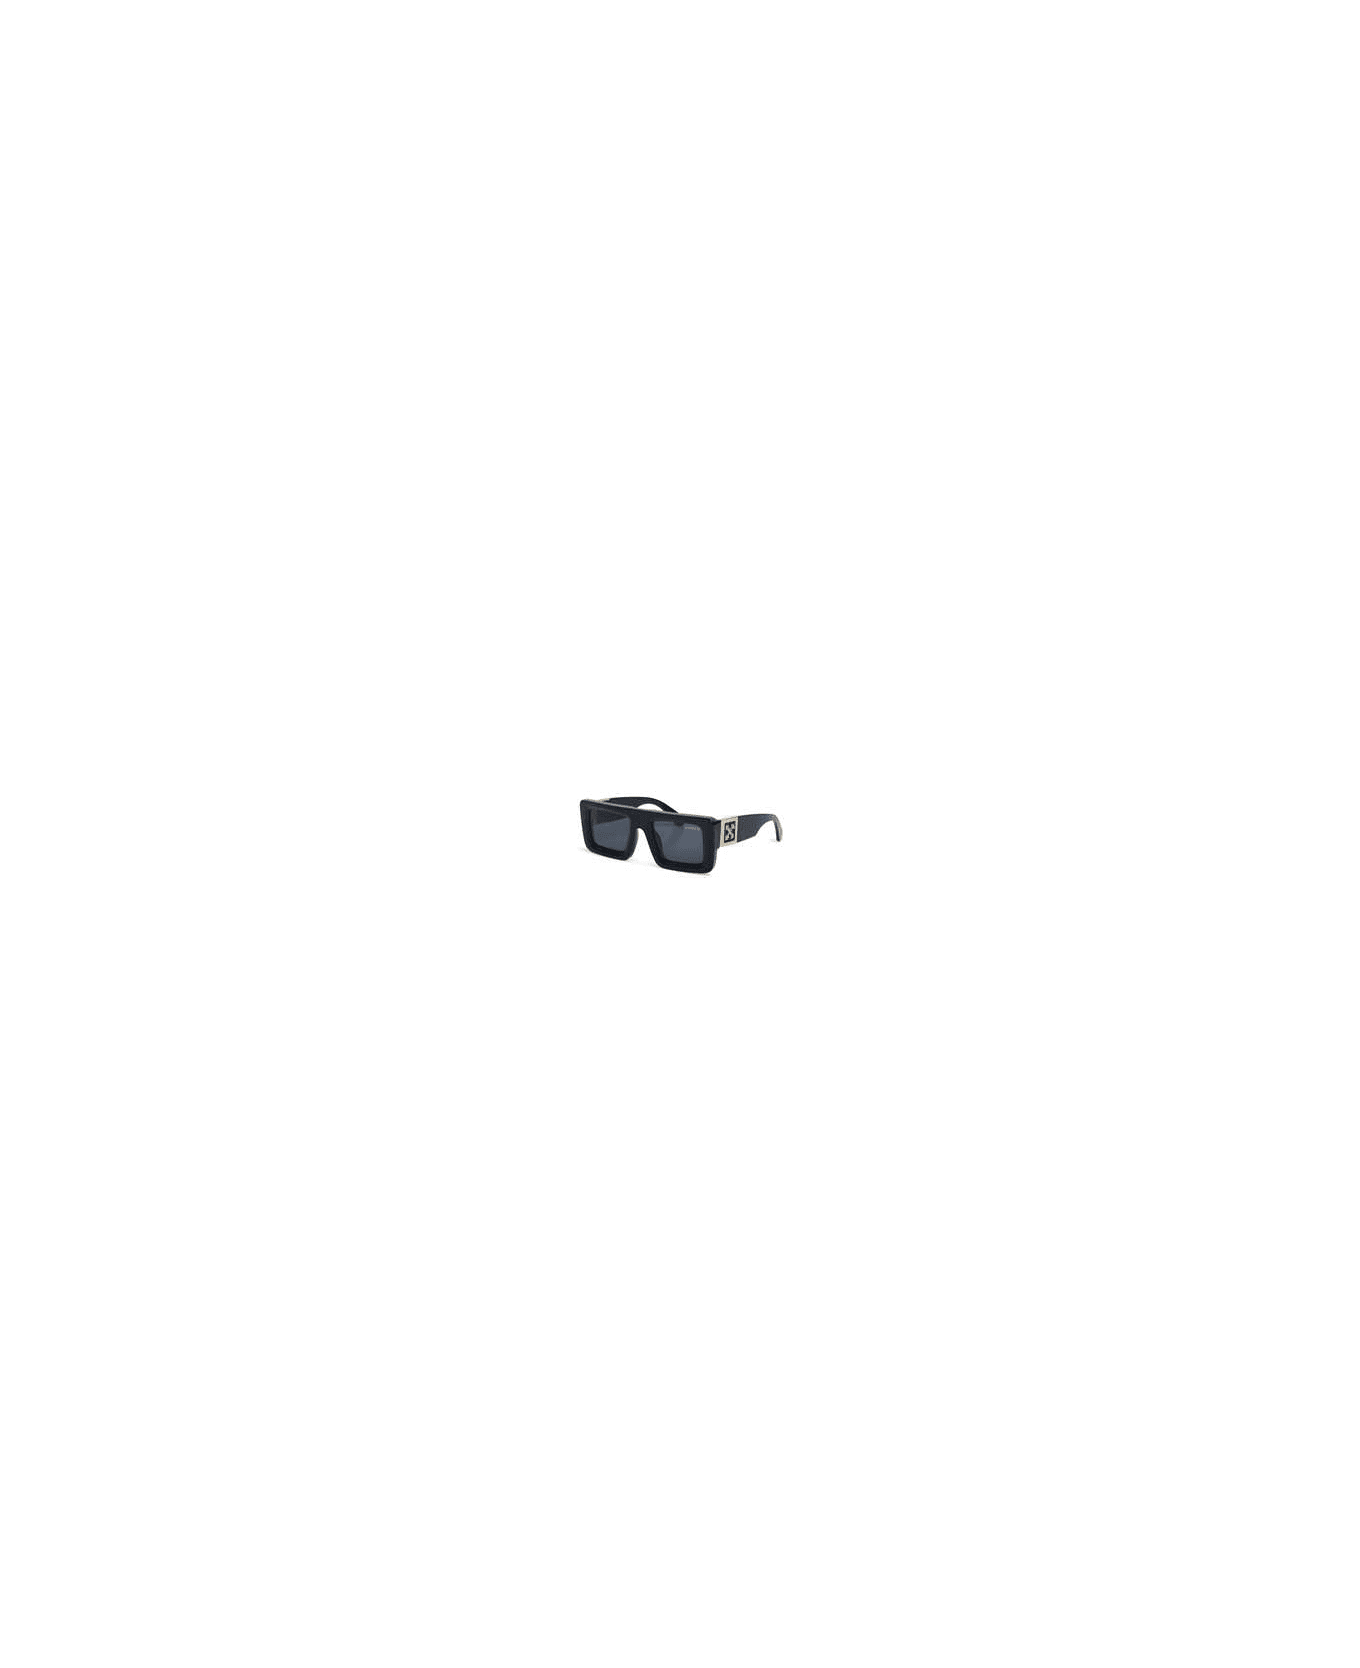 Off-White AF LEONARDO SUNGLASSES BLACK D Sunglasses - Black